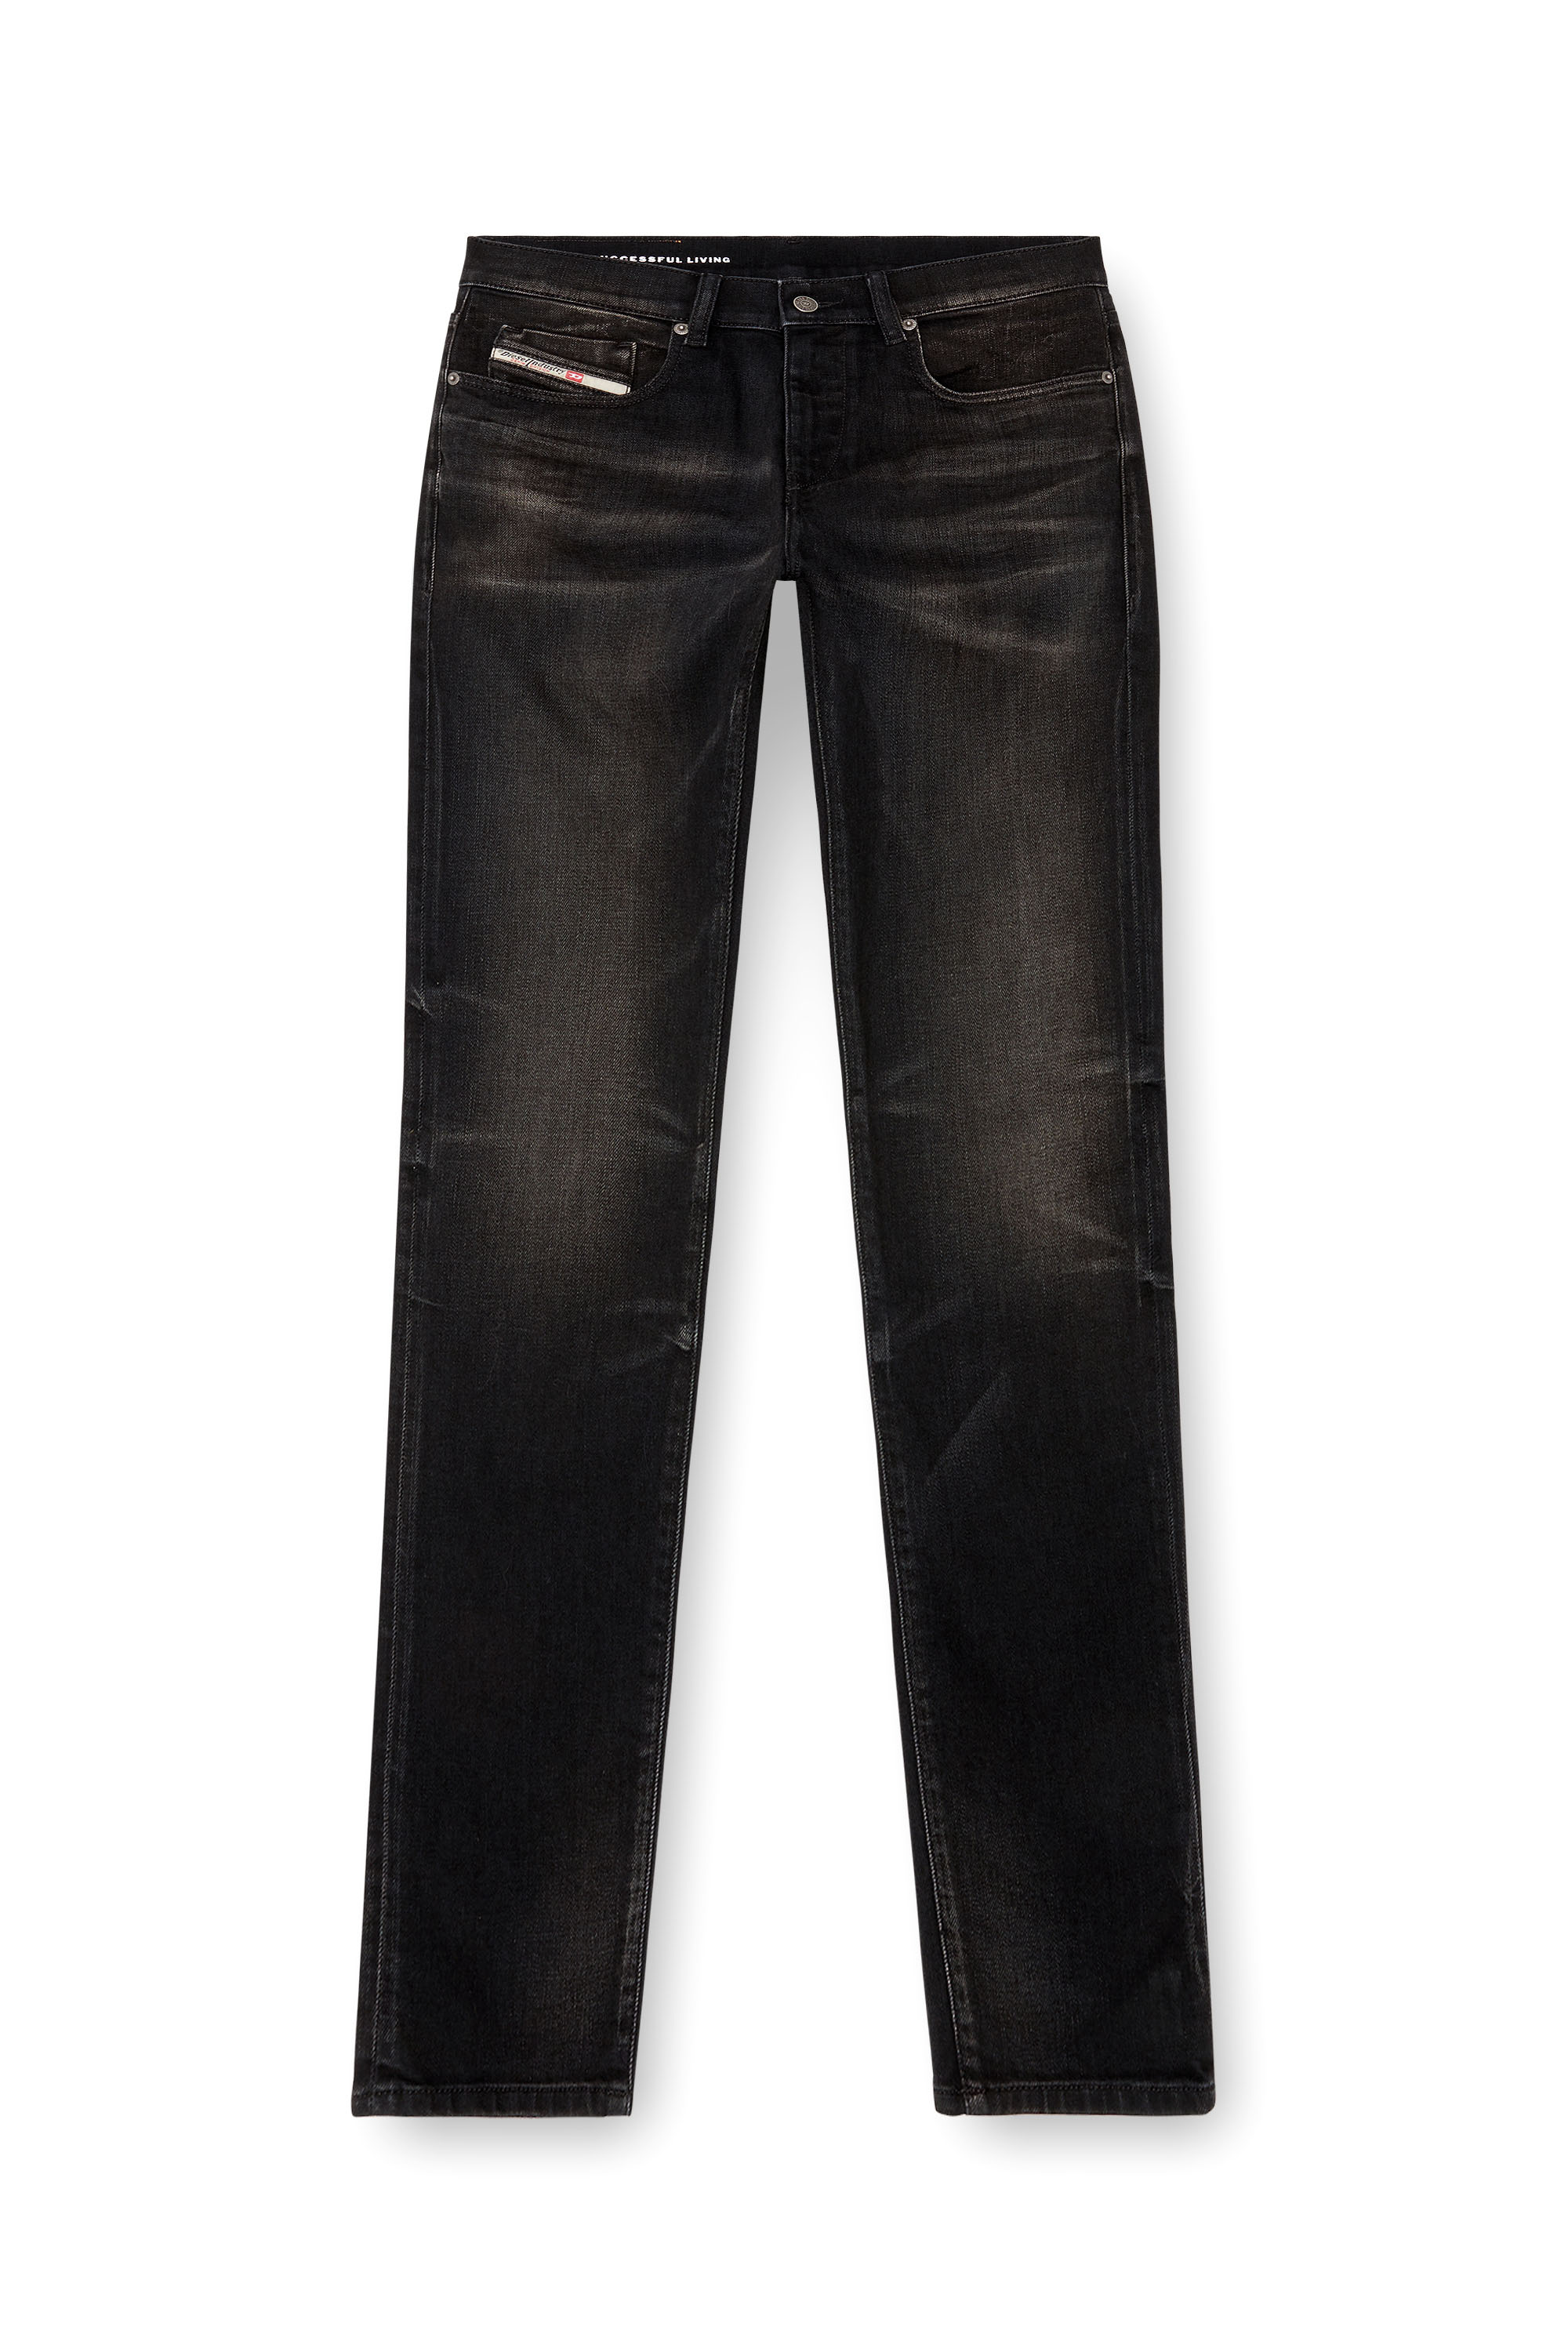 Diesel - Slim Jeans 2019 D-Strukt 09J53, Hombre Slim Jeans - 2019 D-Strukt in Negro - Image 5